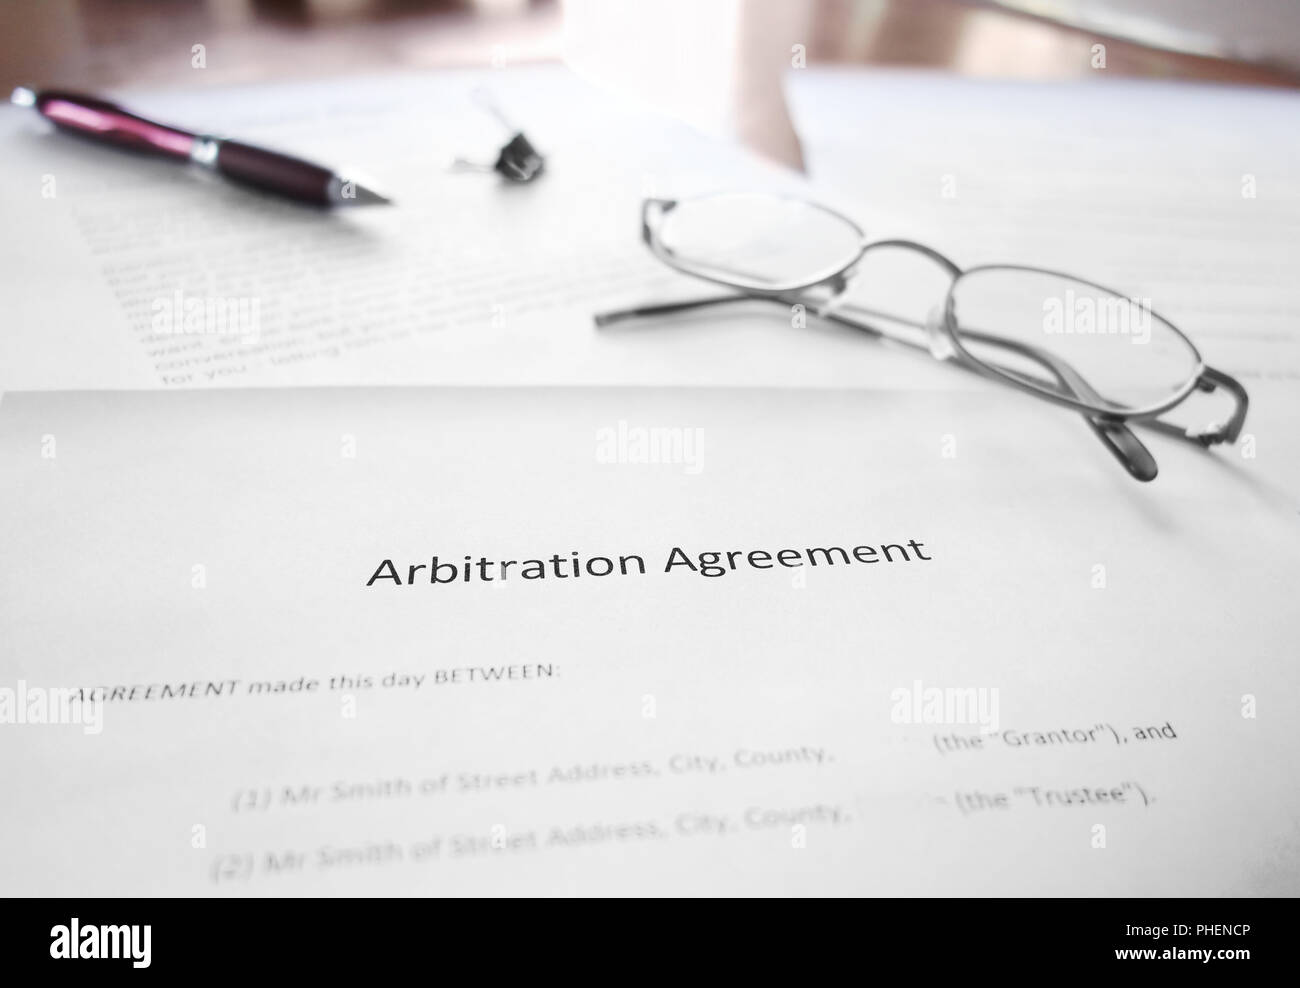 Arbitration Agreement document Stock Photo